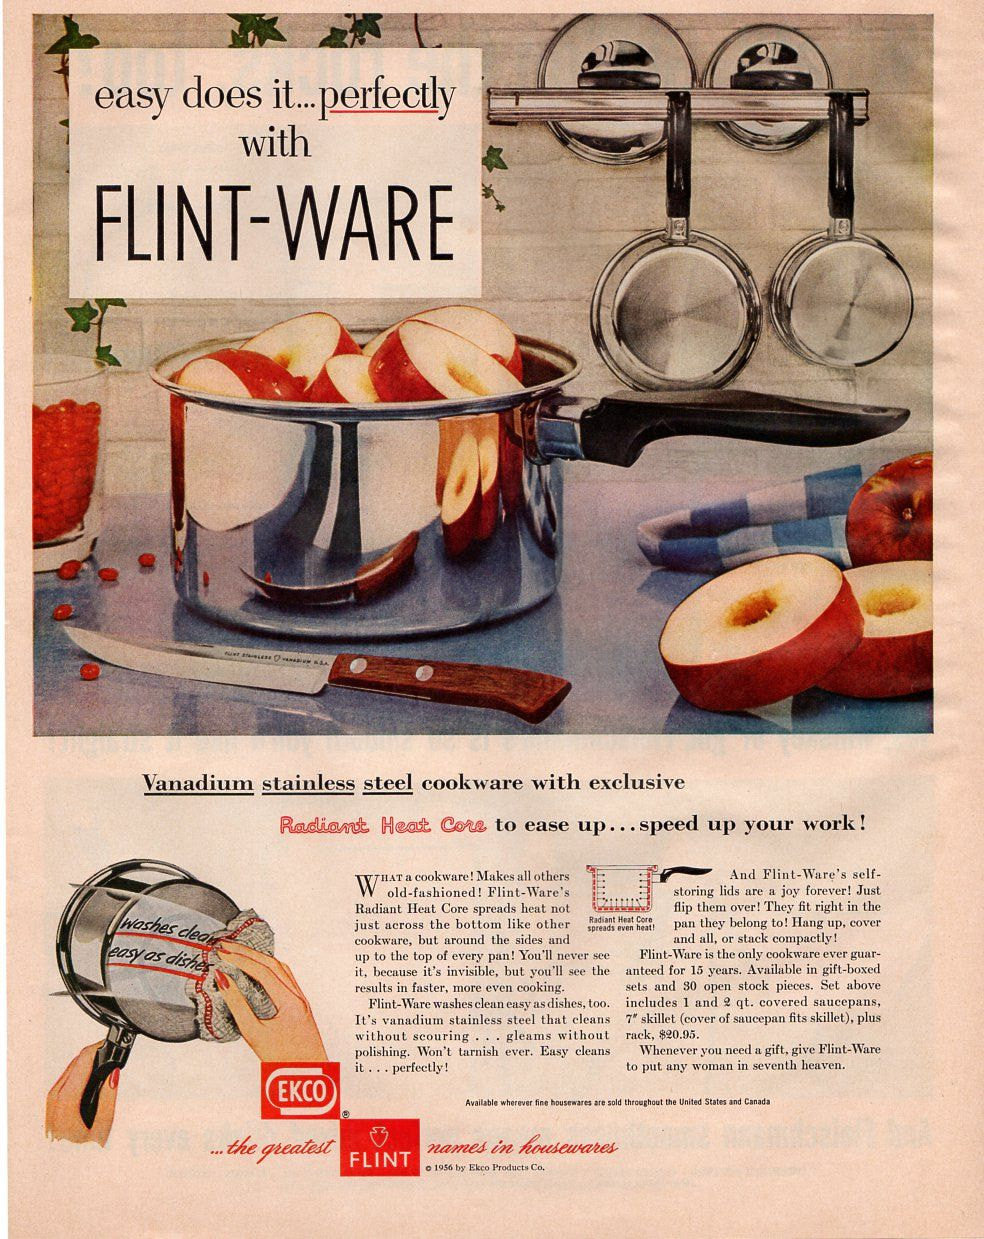 Wear Ever  Vintage cookware, Wearever cookware, Vintage ads